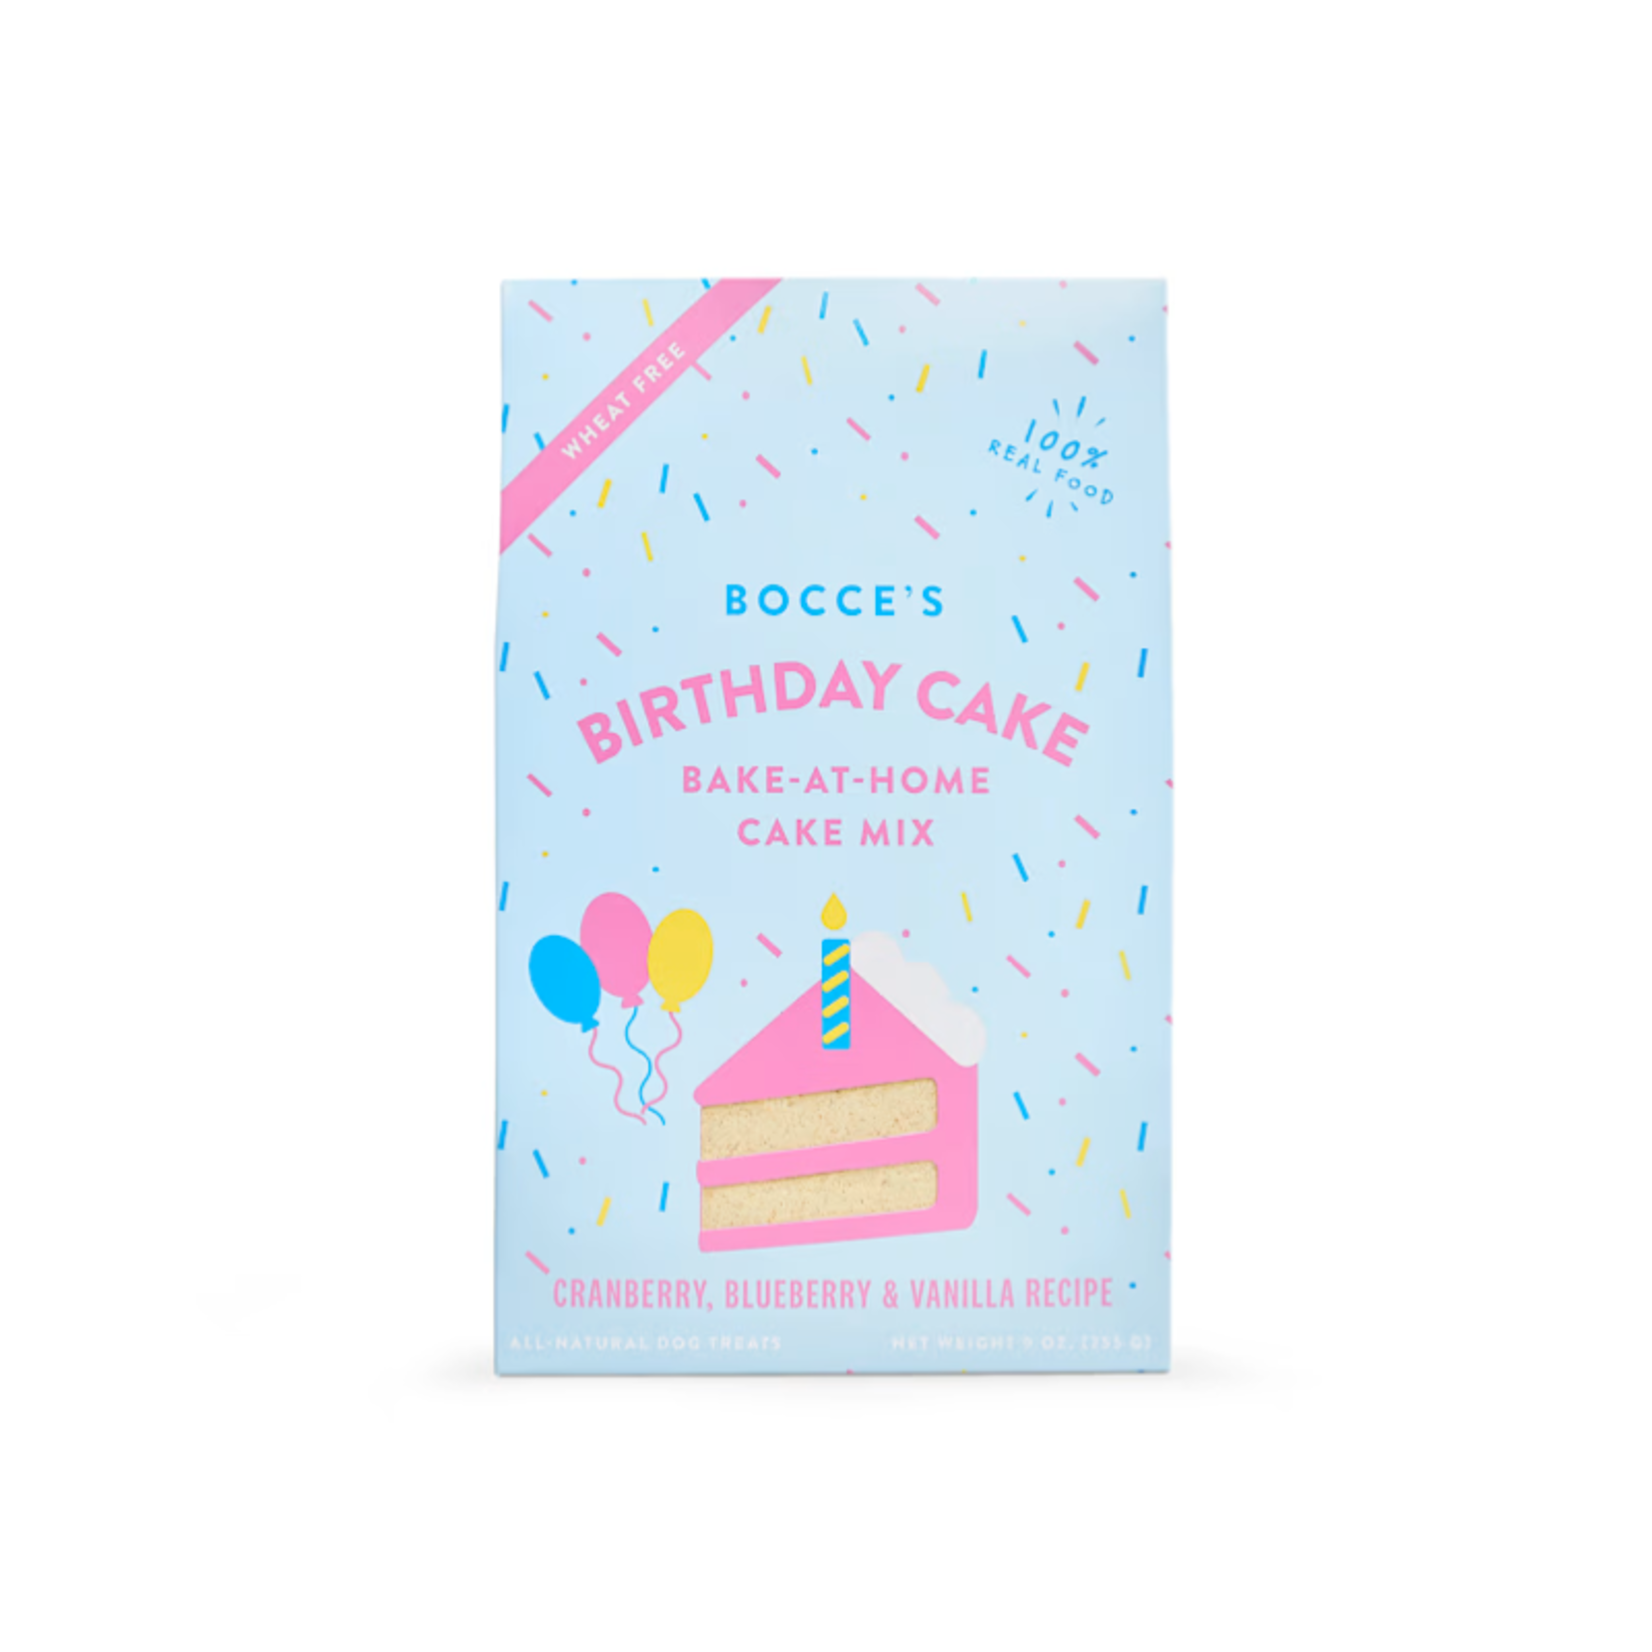 Bocce's Bakery 9 oz. - Birthday Cake MIx - Bake-at-Home - Bocce's Bakery